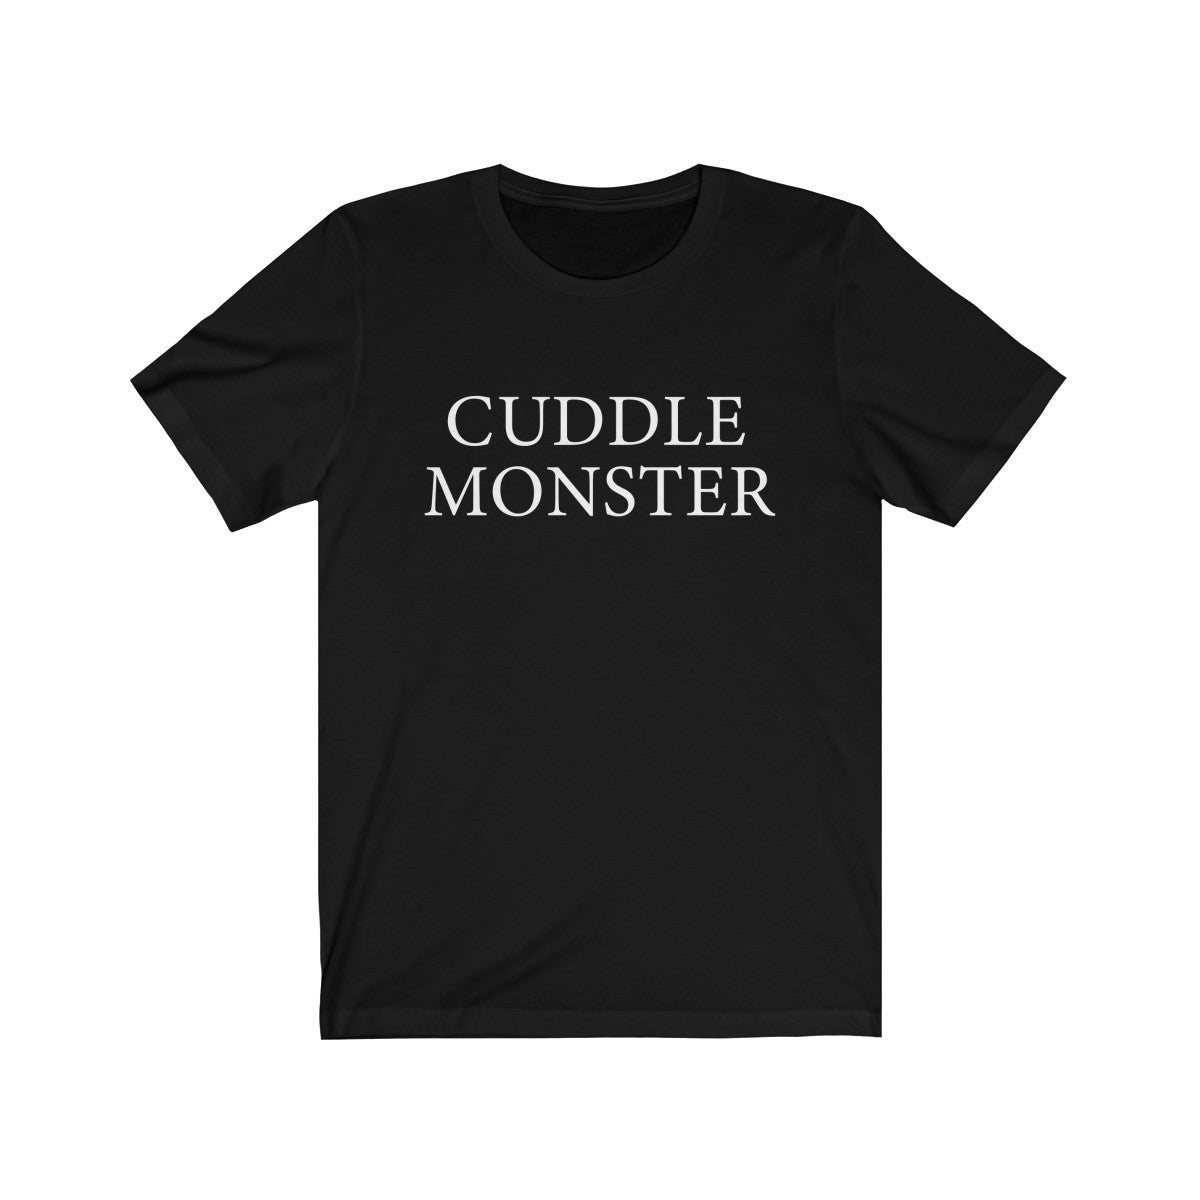 'Cuddle Monster' Short Sleeve Tee